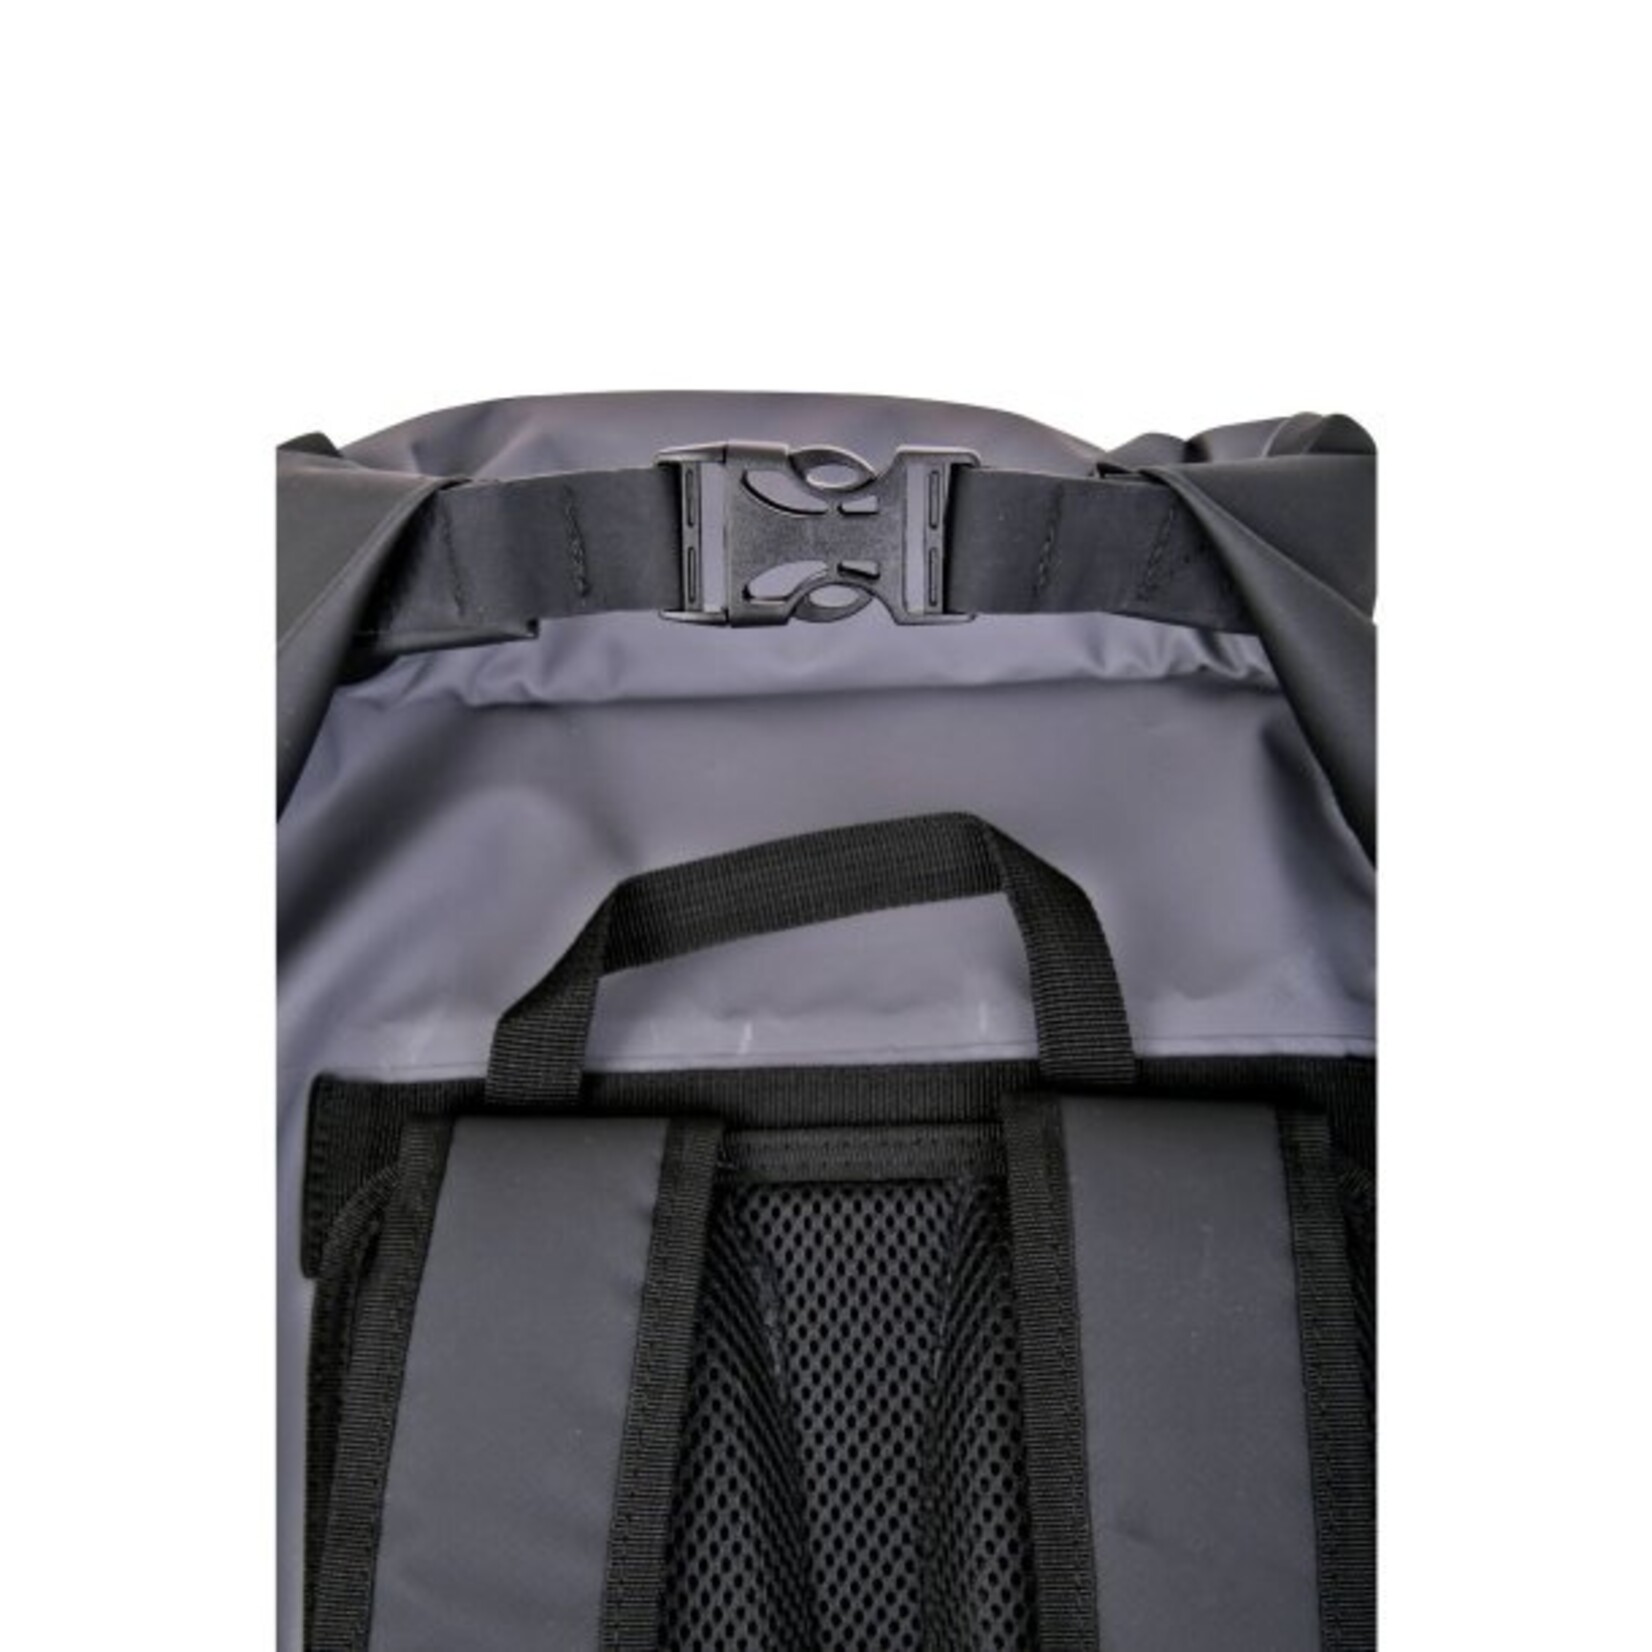 Plastimo Osea backpack 20L